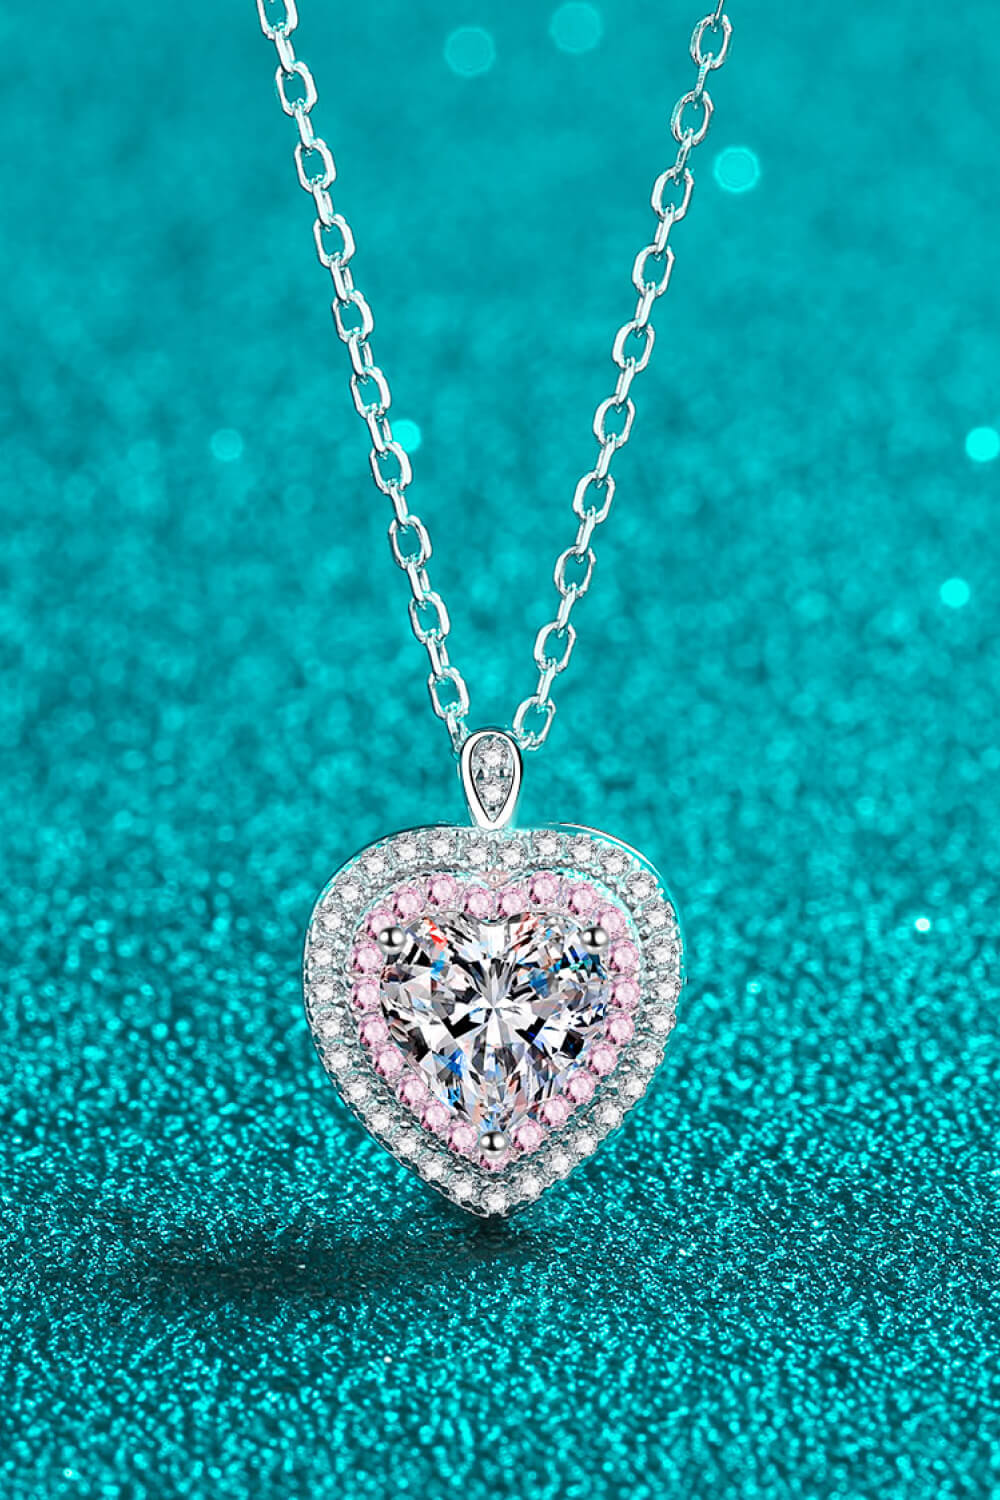 925 Sterling Silver 1 Carat Moissanite Heart Pendant Necklace